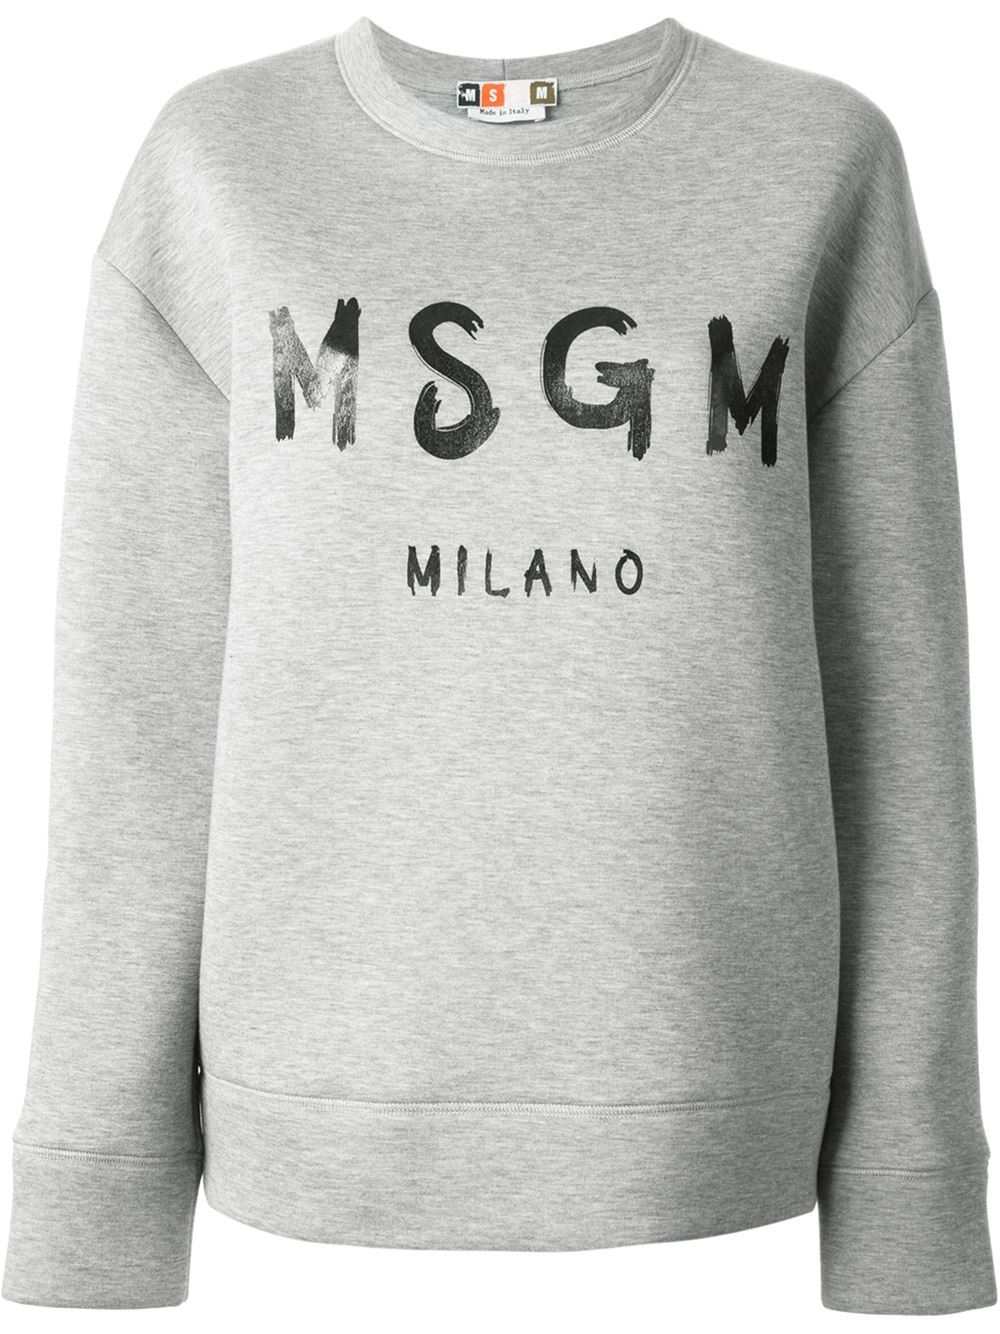 Lyst - Msgm Logo Print Sweatshirt in Gray